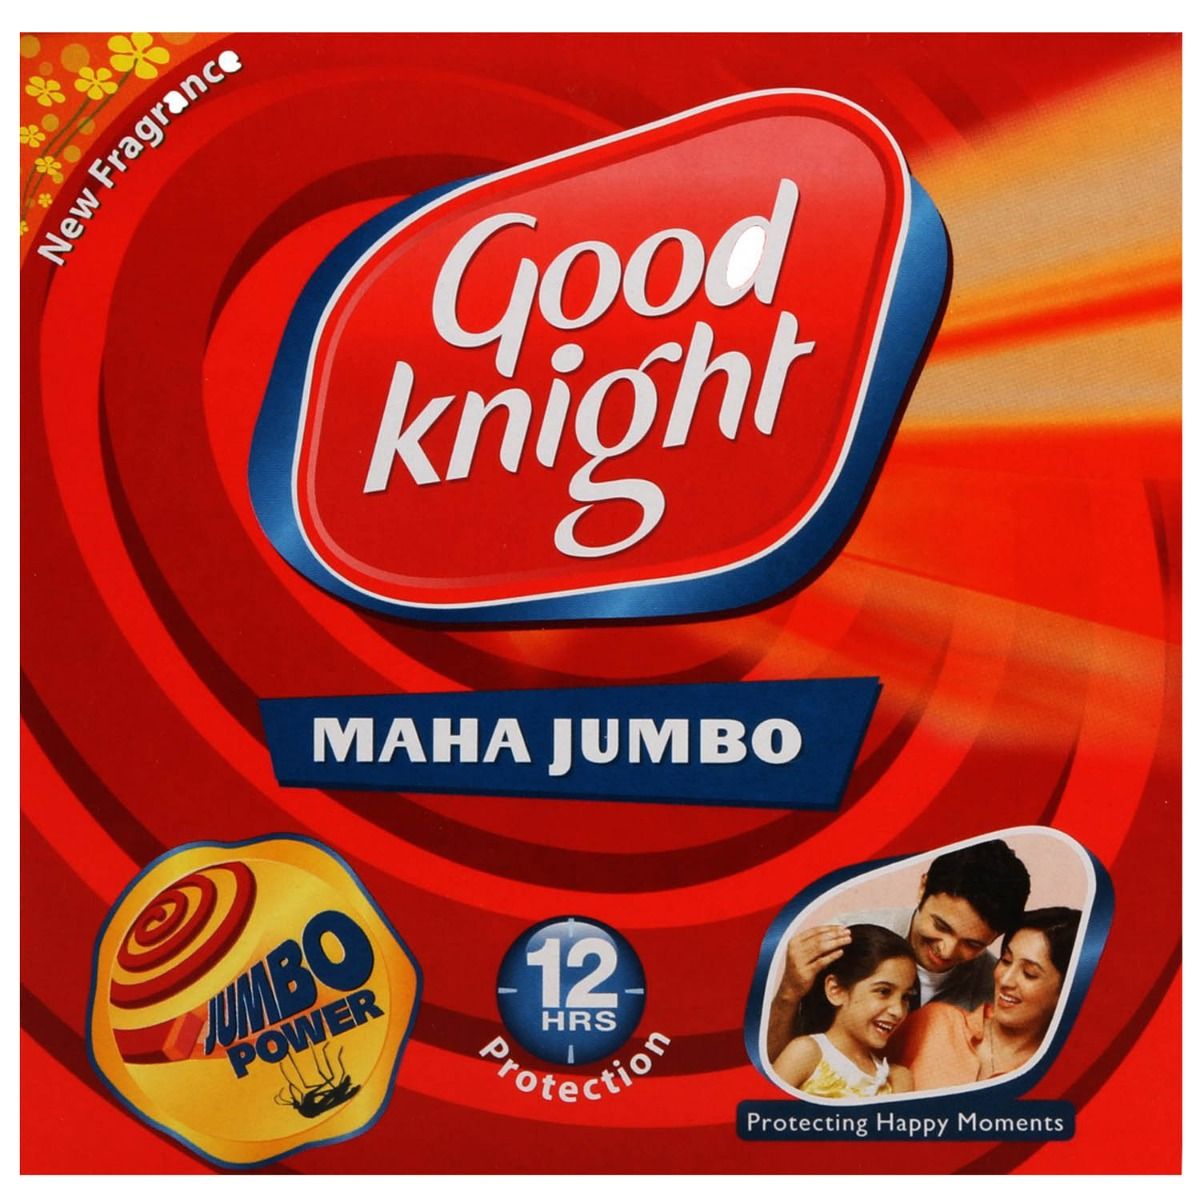 Buy Good Knight Maha Jumbo Coil 12 Hr Online